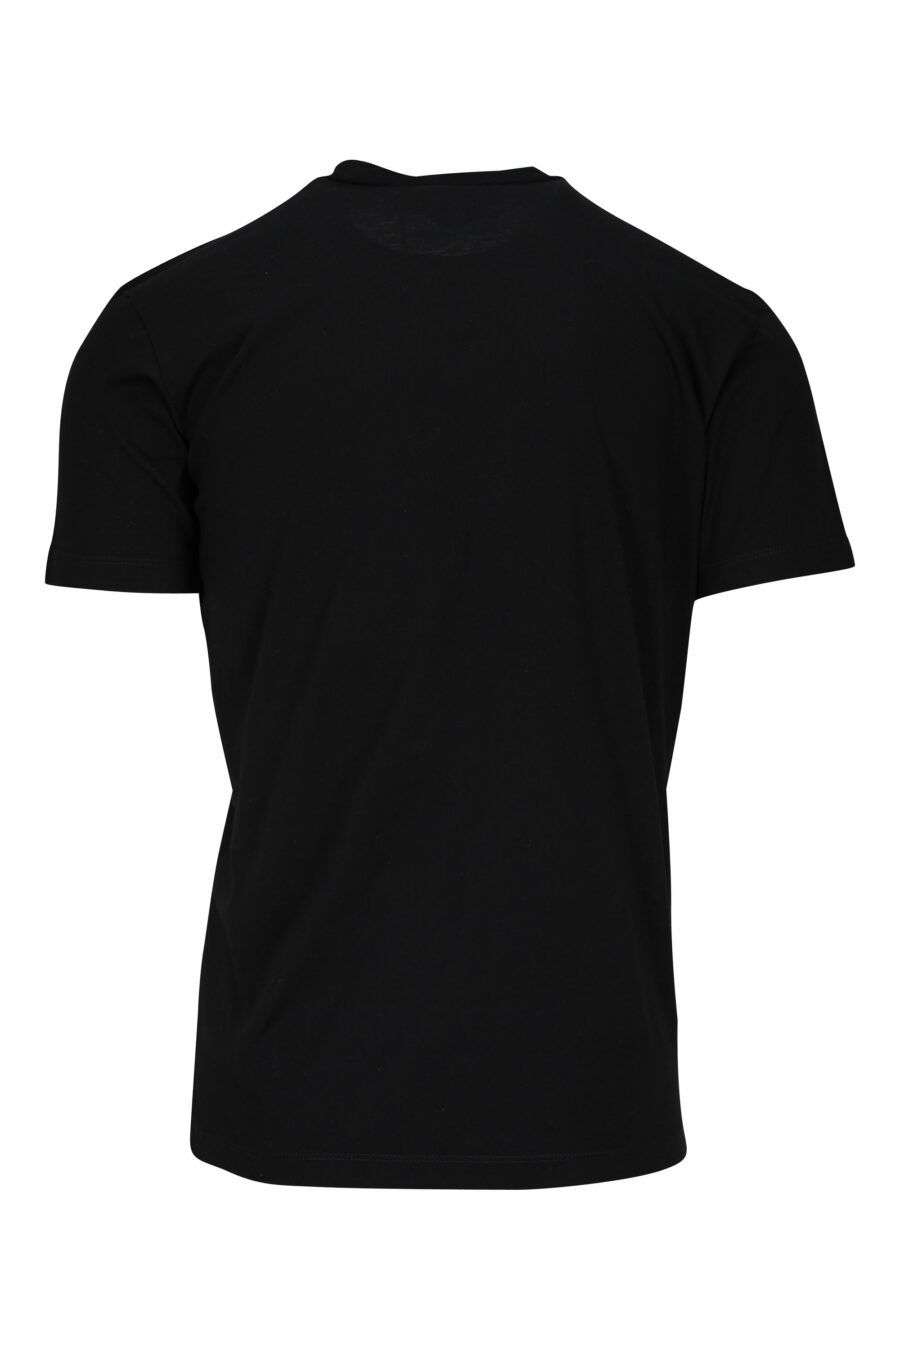 Schwarzes T-shirt mit rgb maxilogo - 8052134941157 1